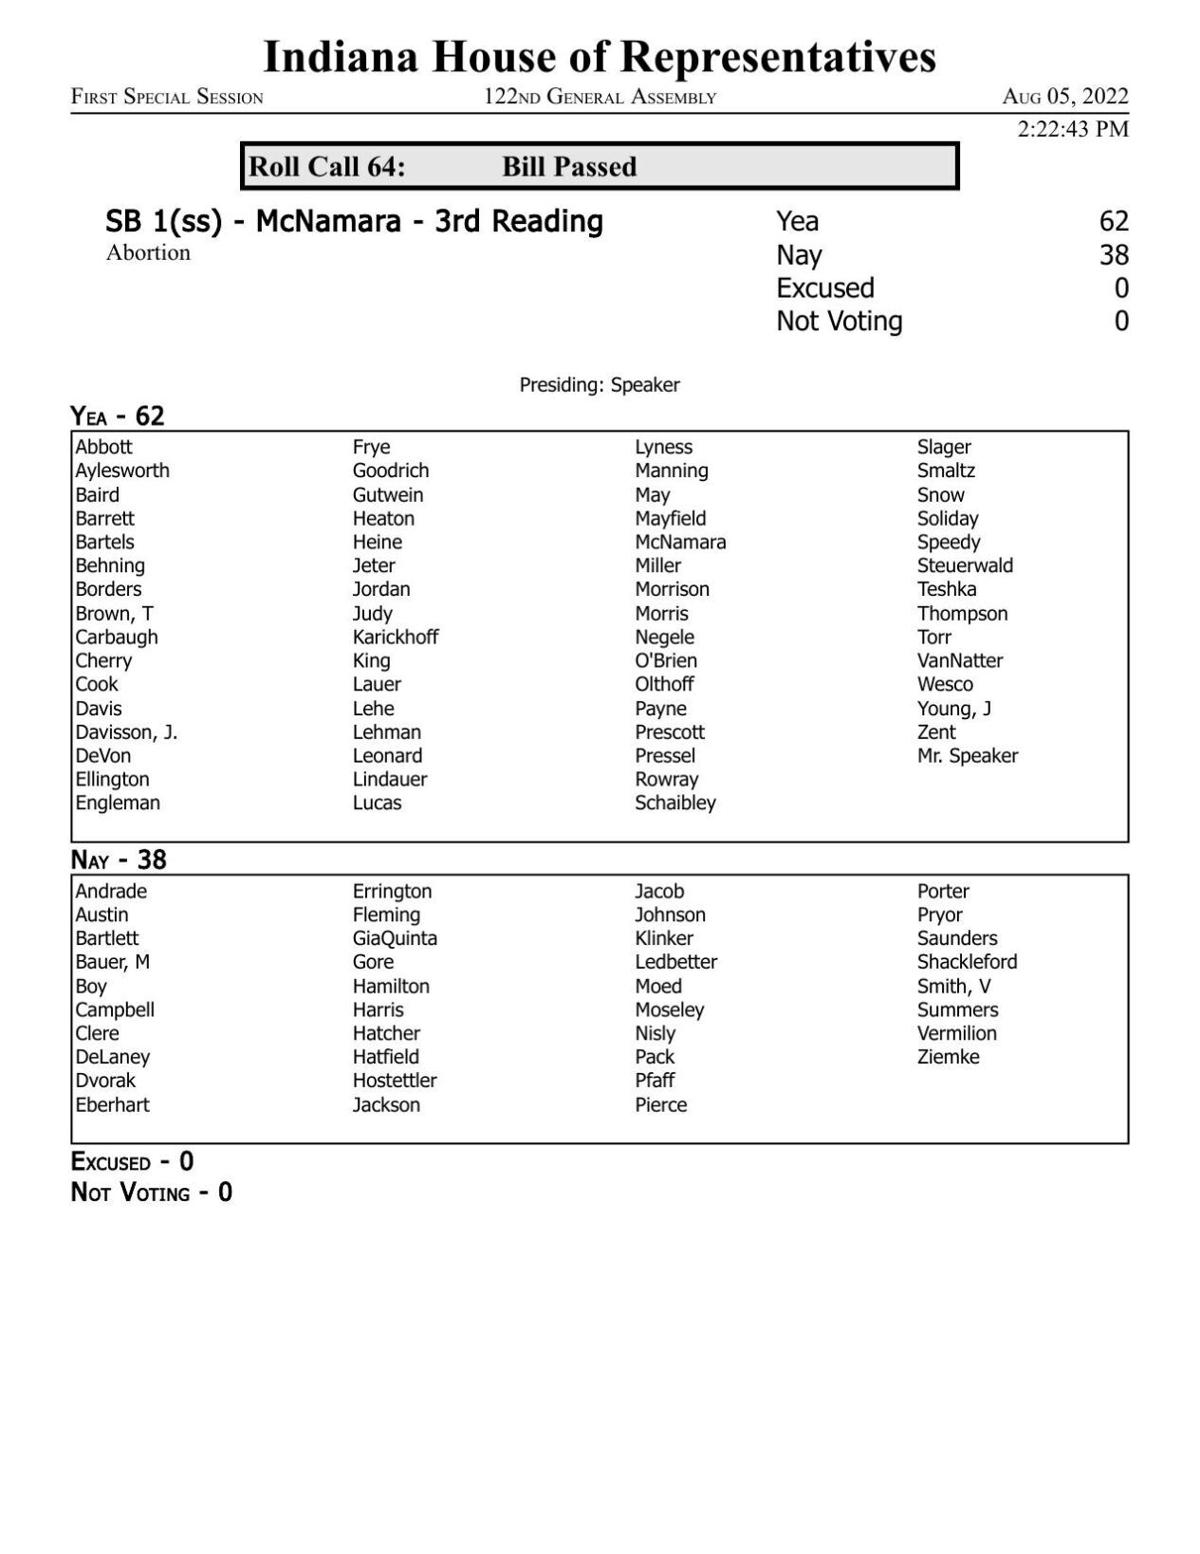 Indiana House roll call on Senate Bill 1